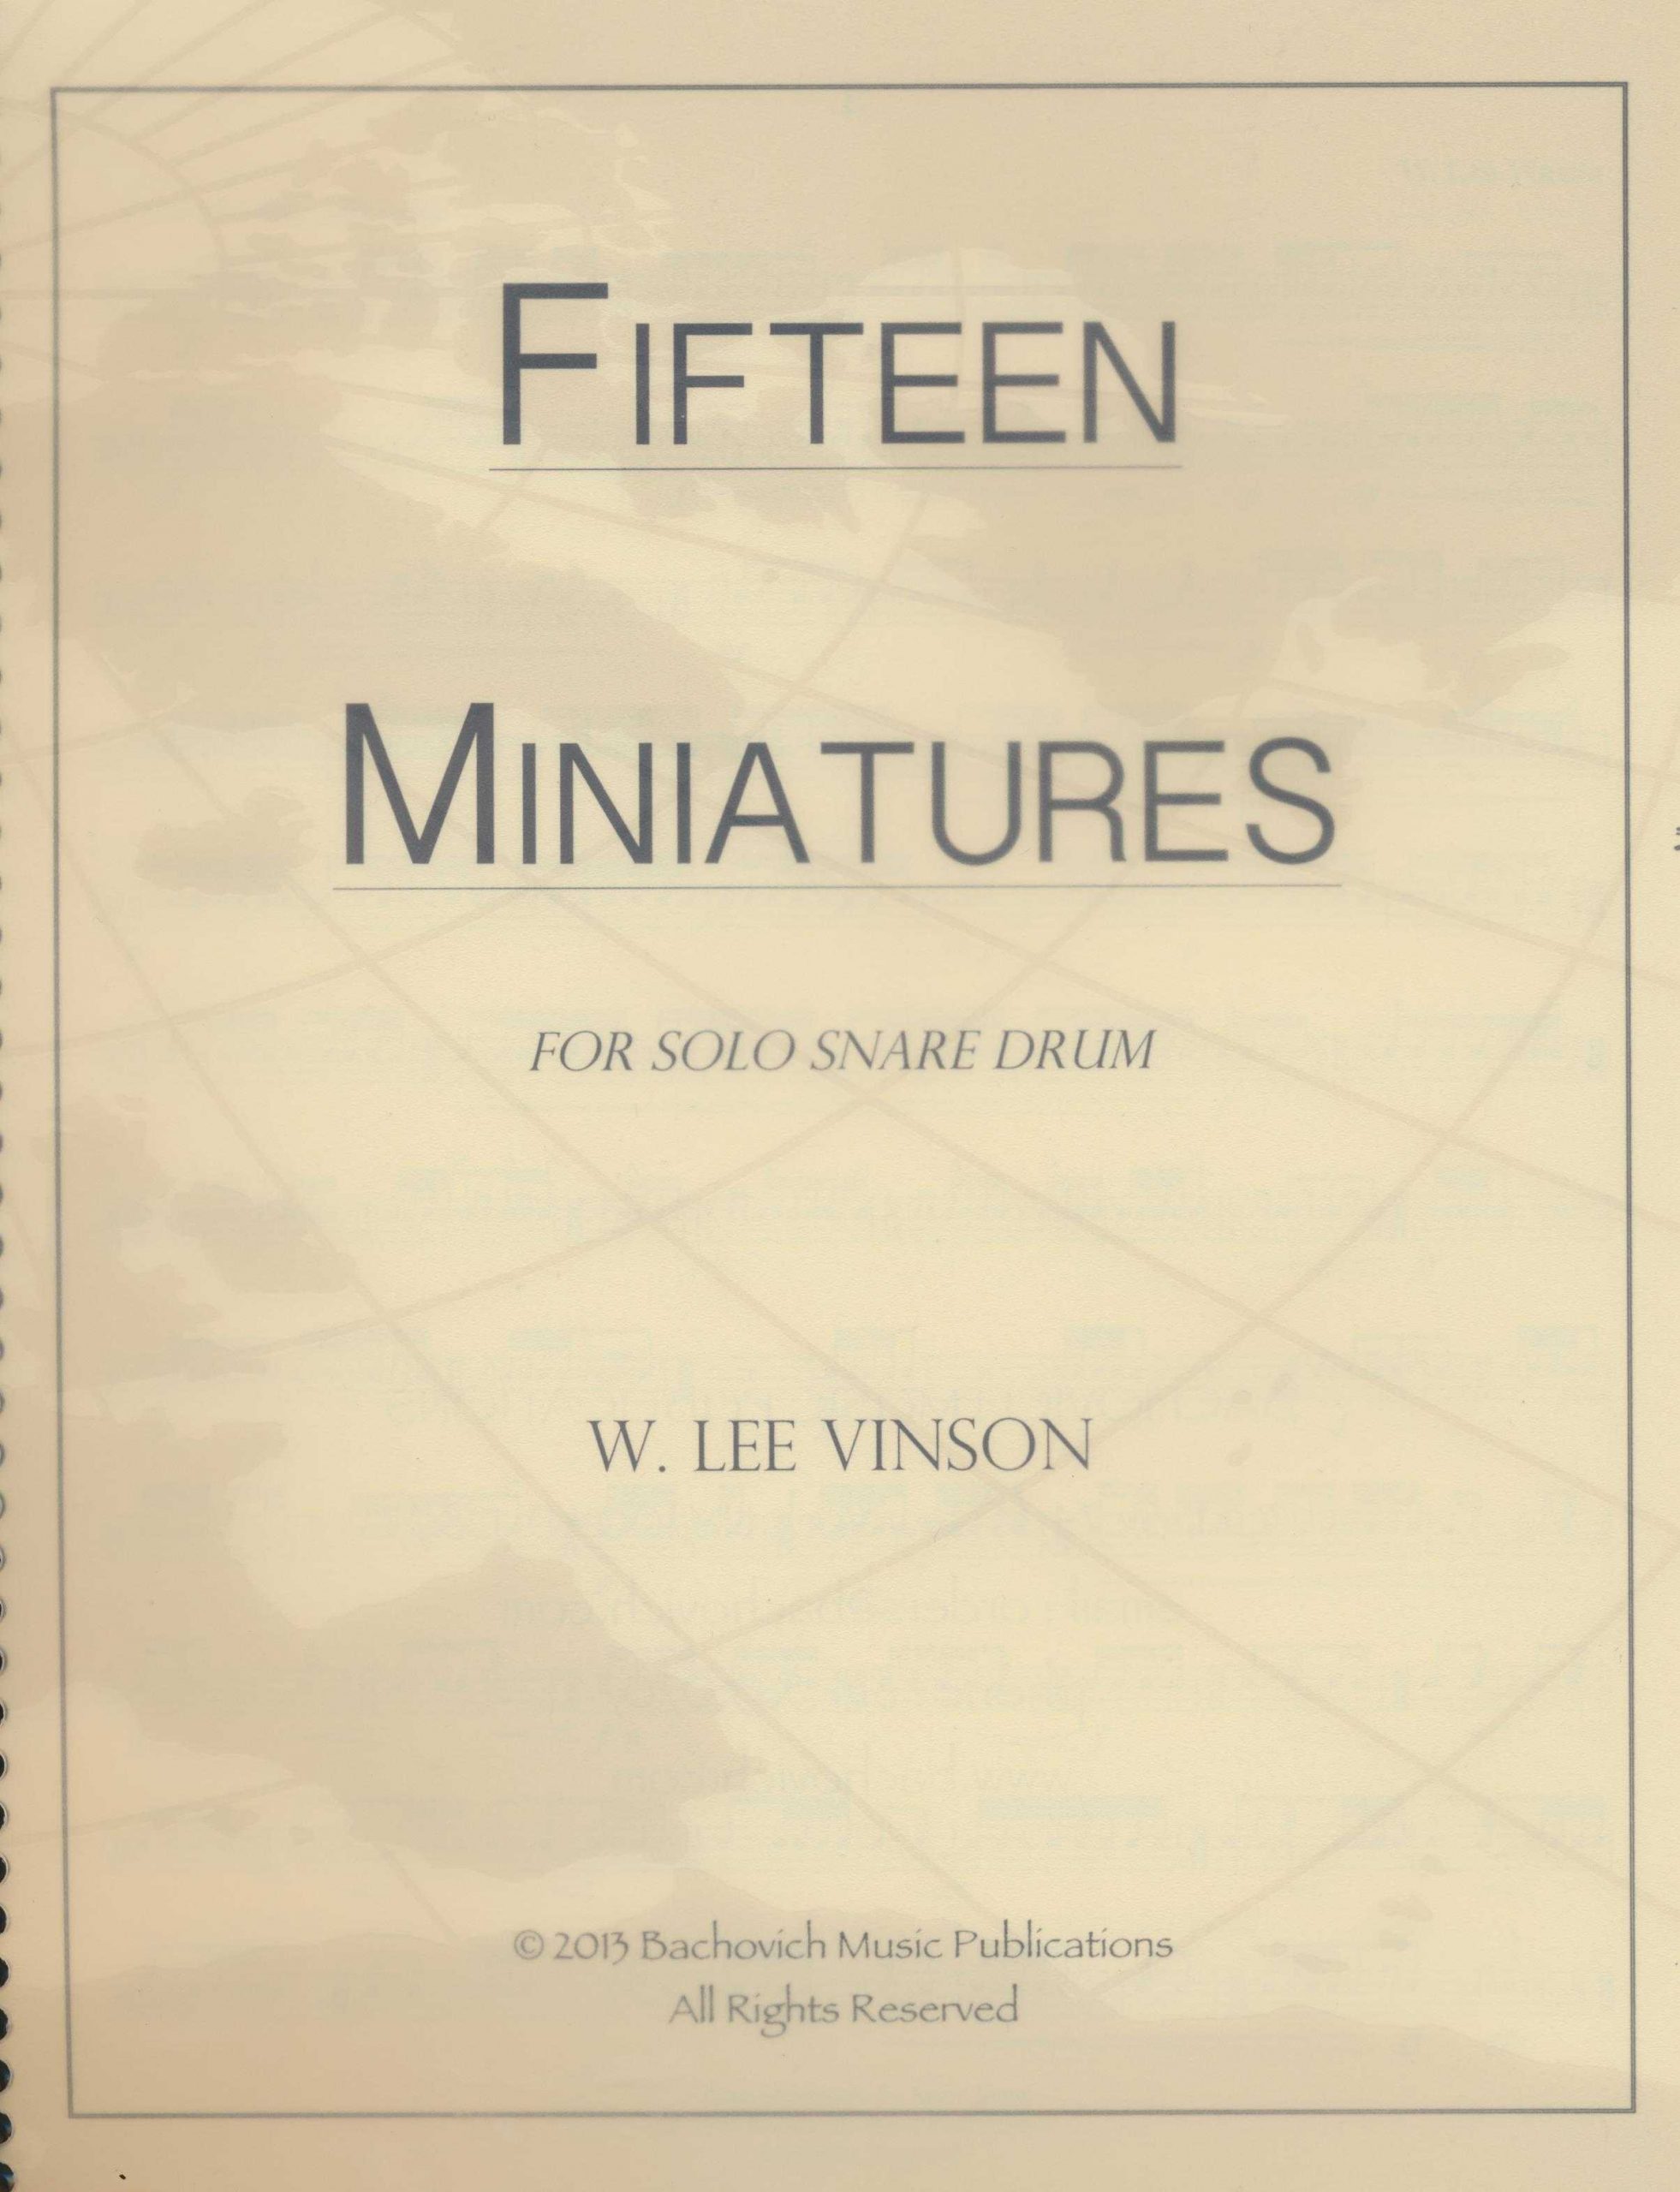 Fifteen Miniatures by W. Lee Vinson